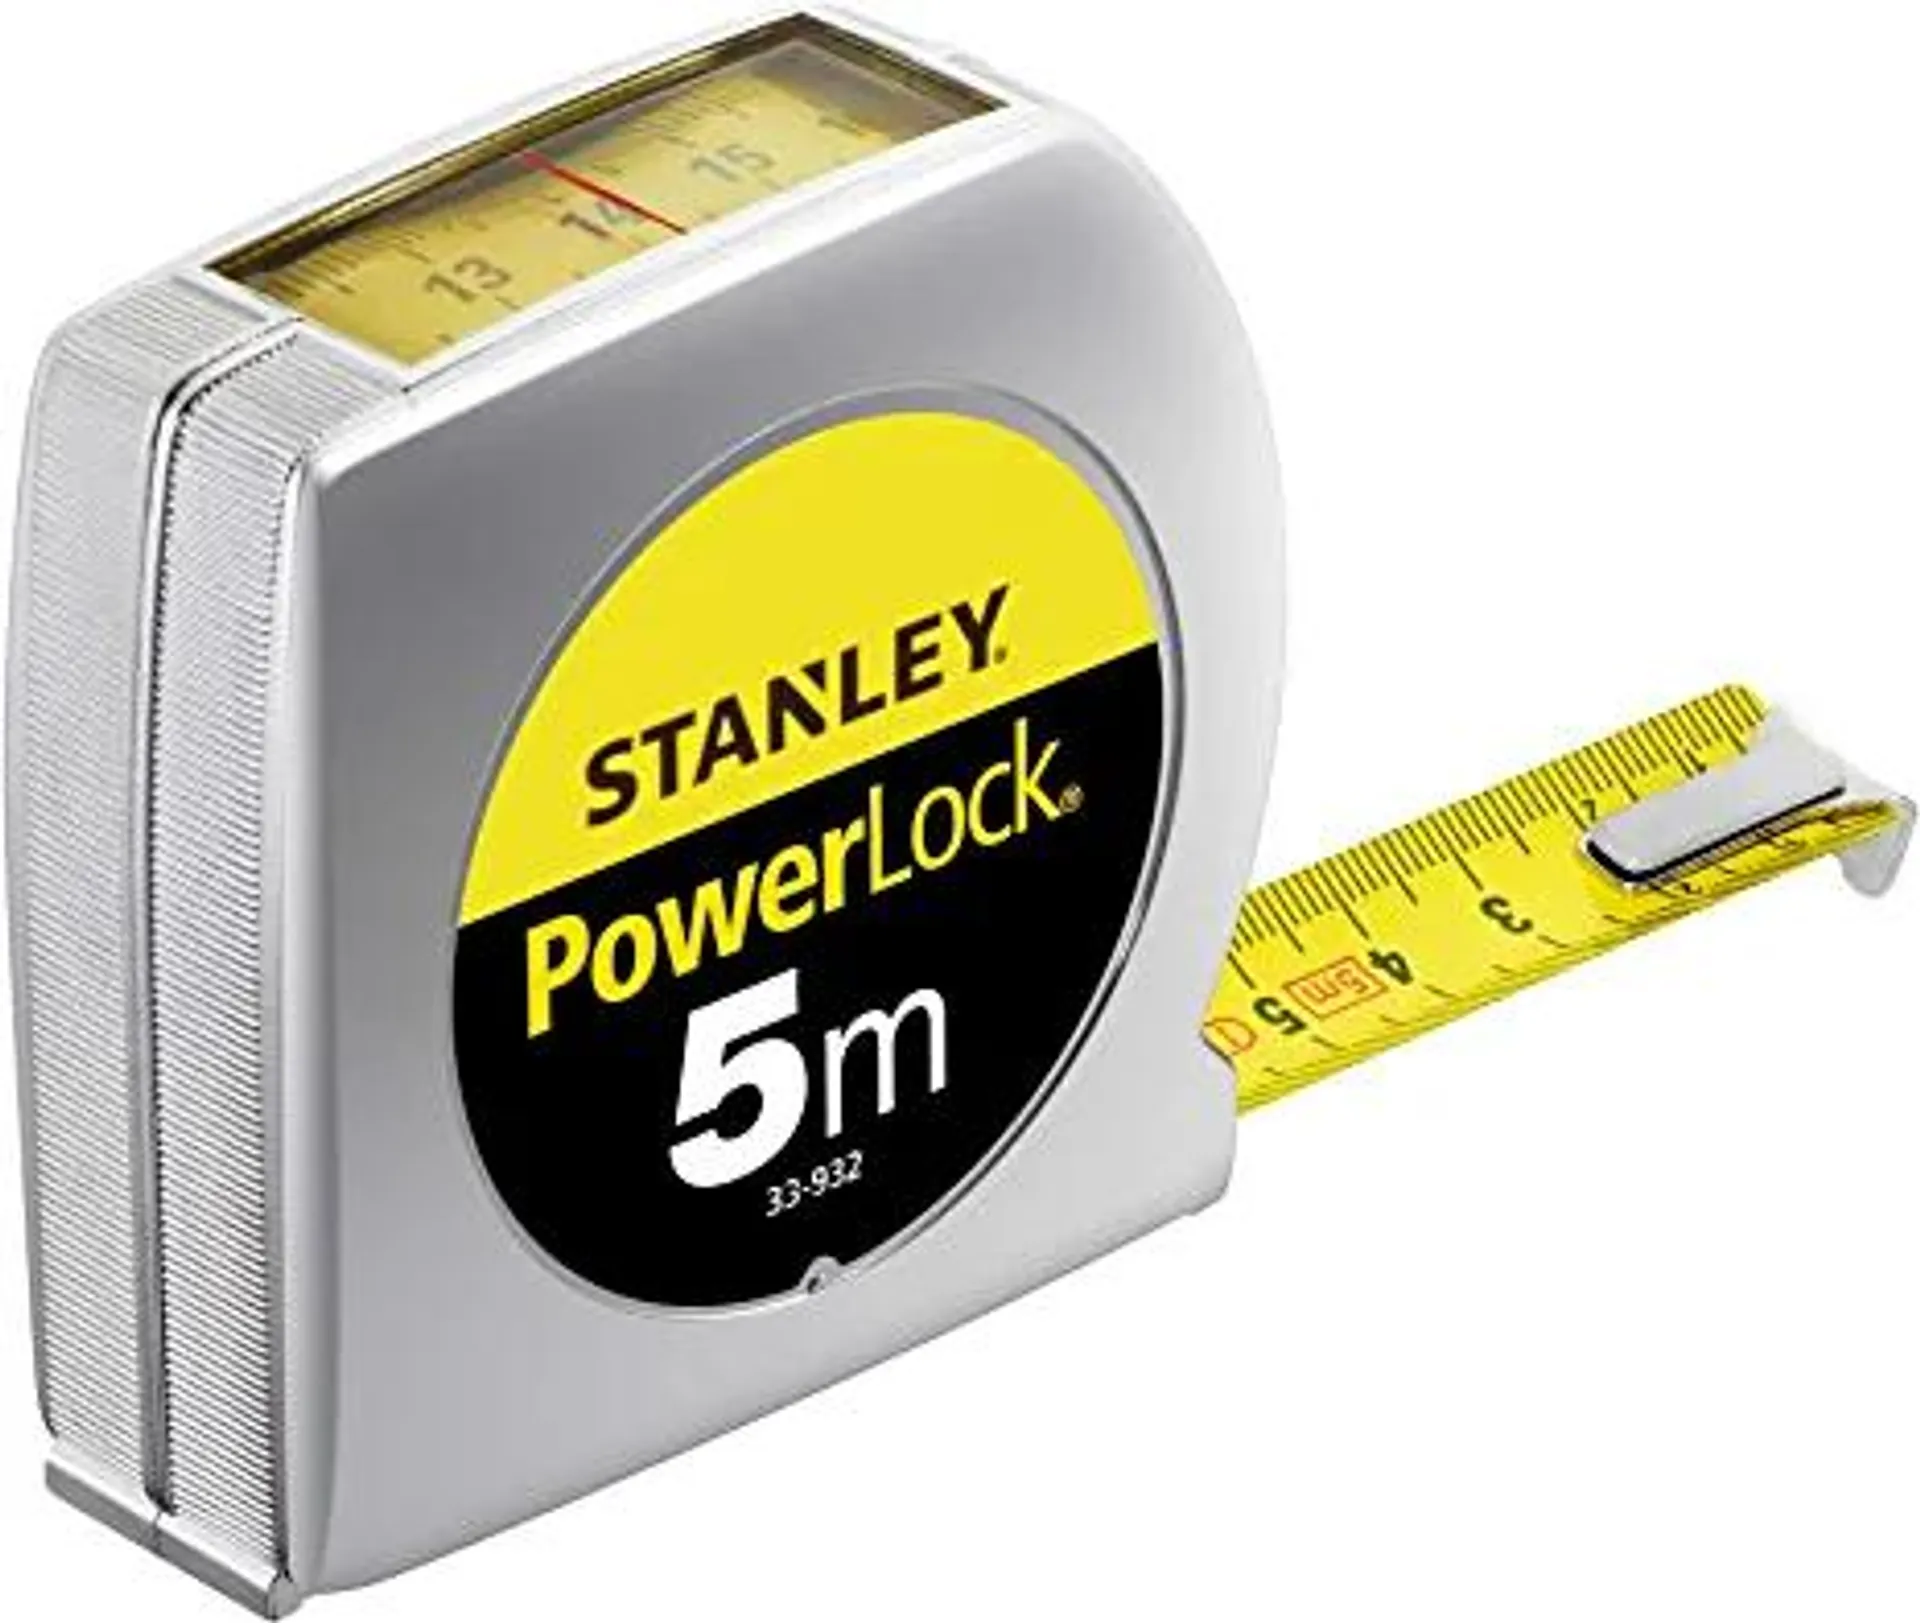 Stanley 0-33-932 Power lock Tape Measure, Silver